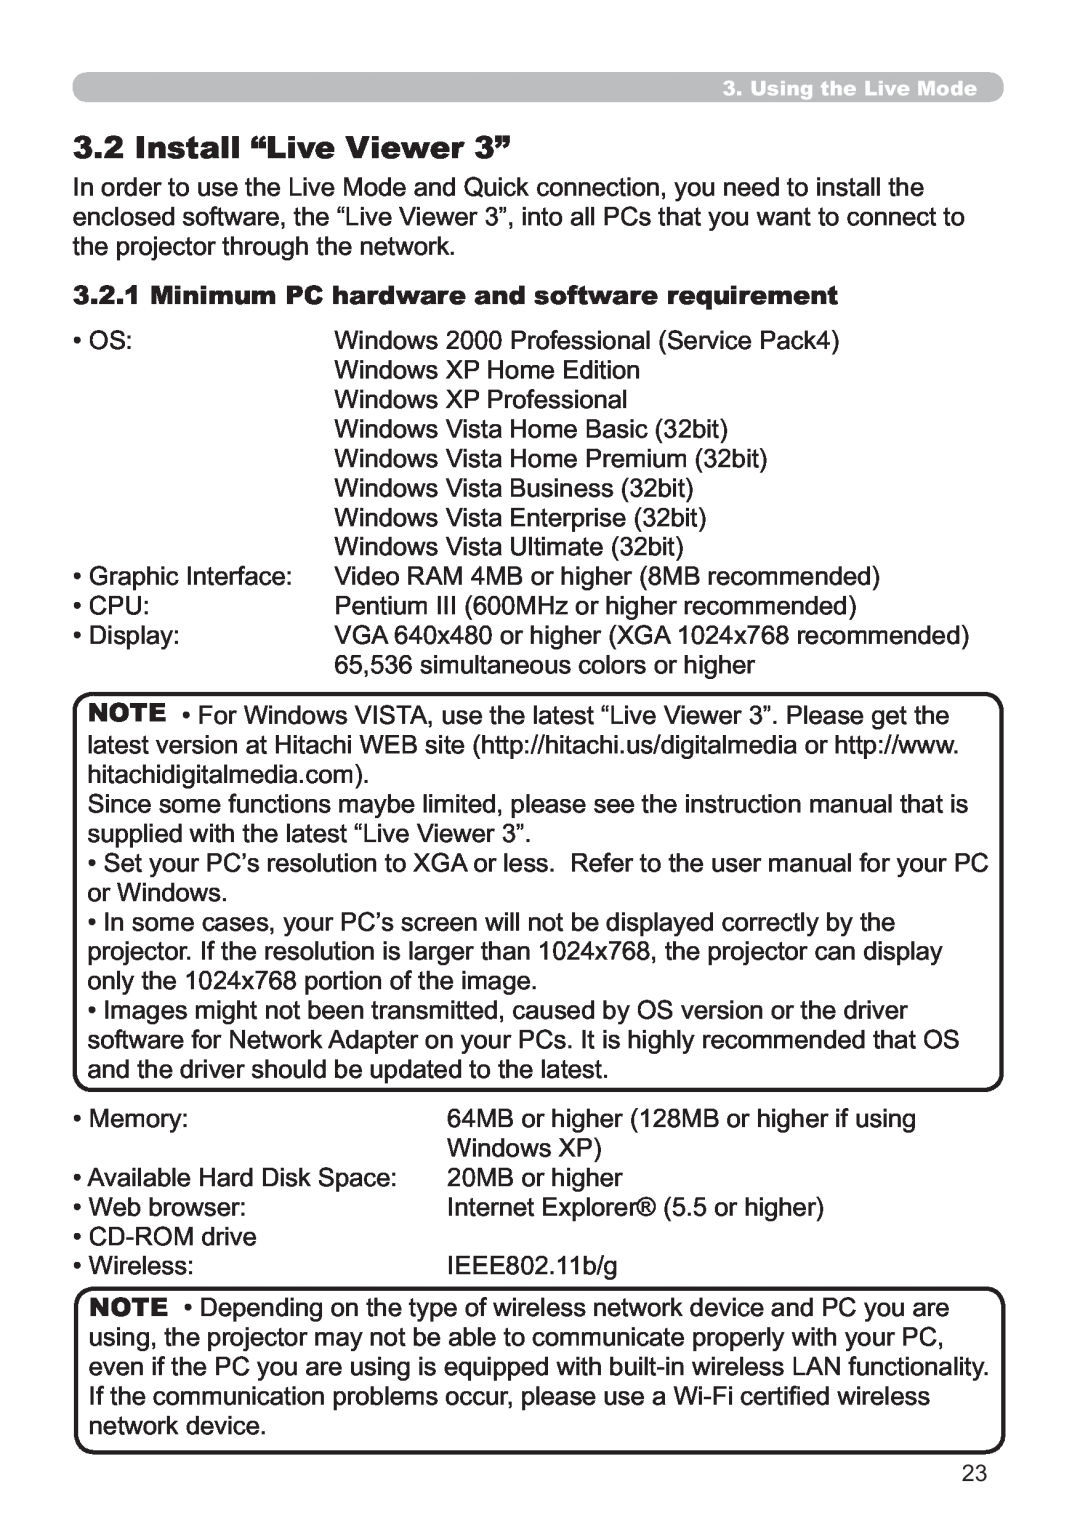 Hitachi CP-X809W Minimum PC hardware and software requirement, ‡&383HQWLXP,,,0+RUKLJKHUUHFRPPHQGHG, LQGRZV3 